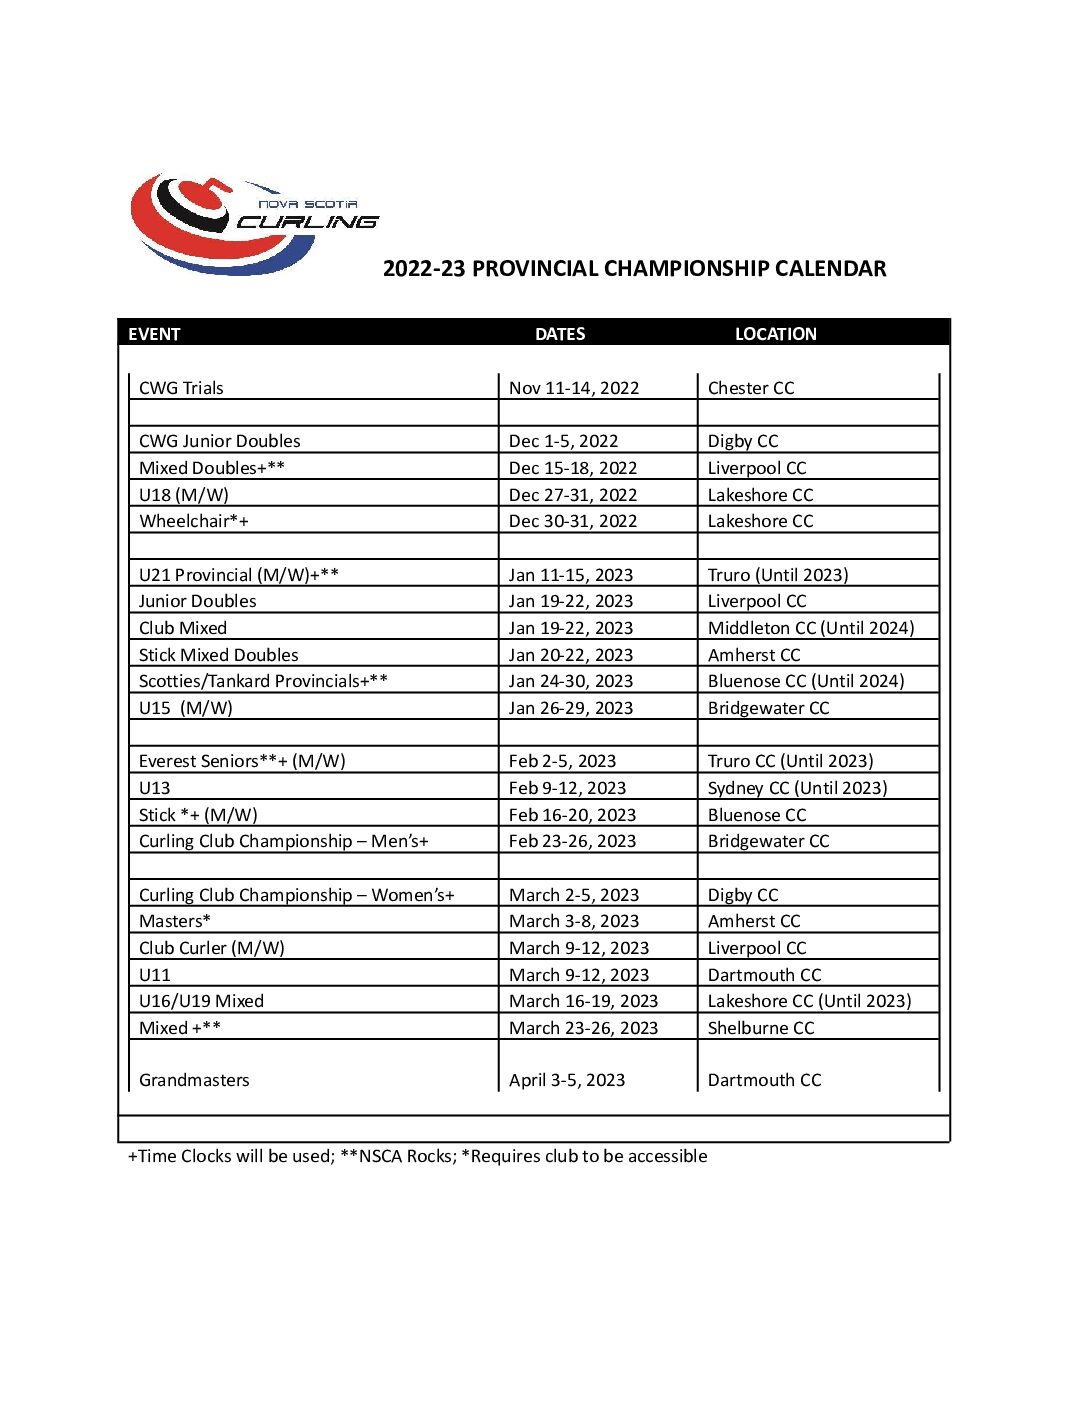 Championship Calendar